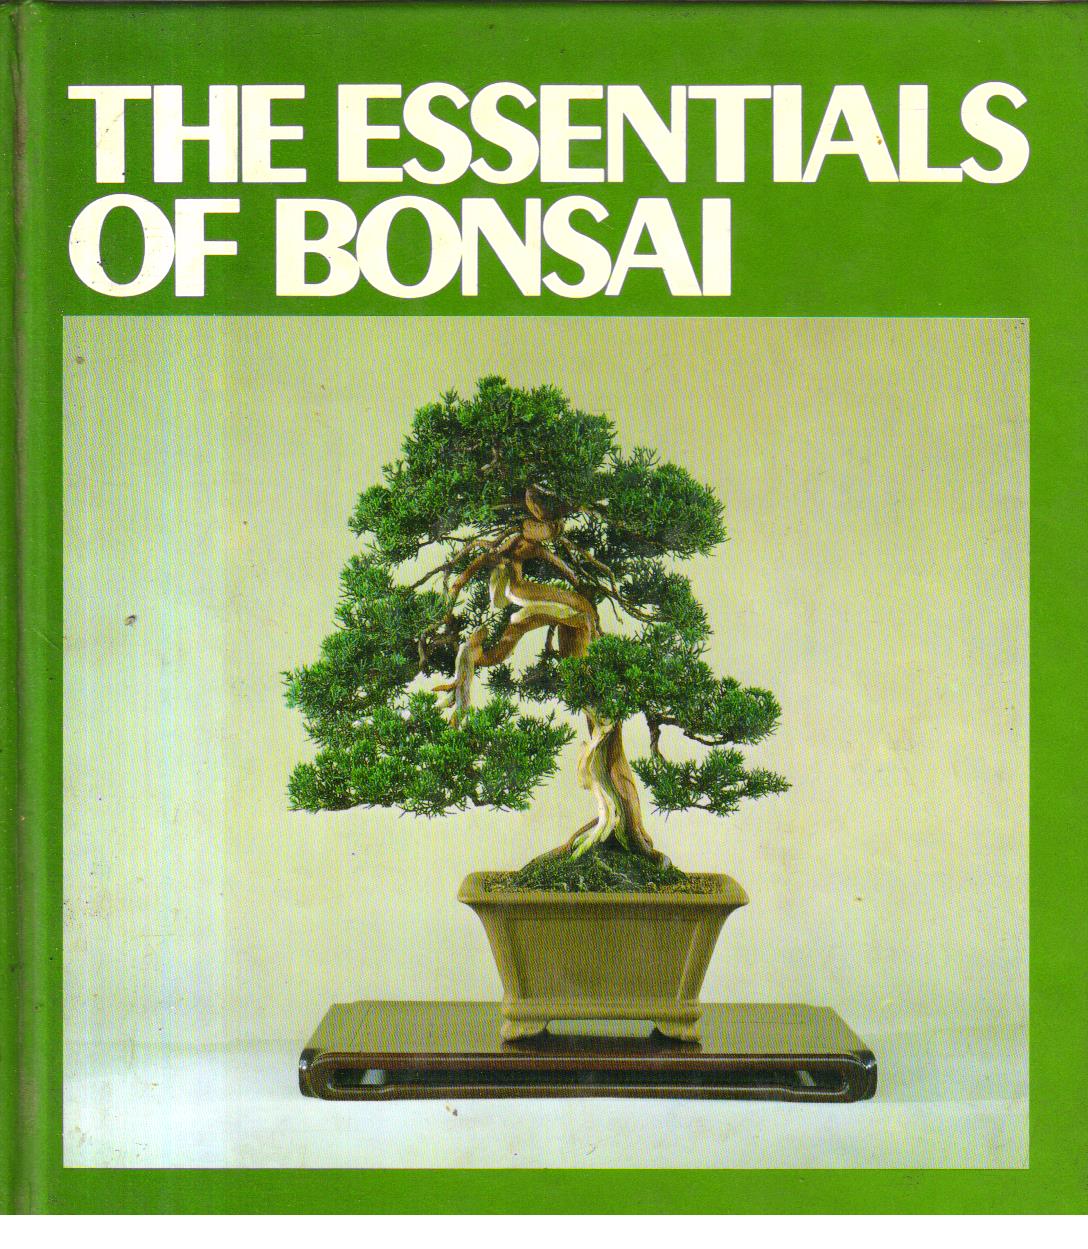 The Essentials of Bonsai